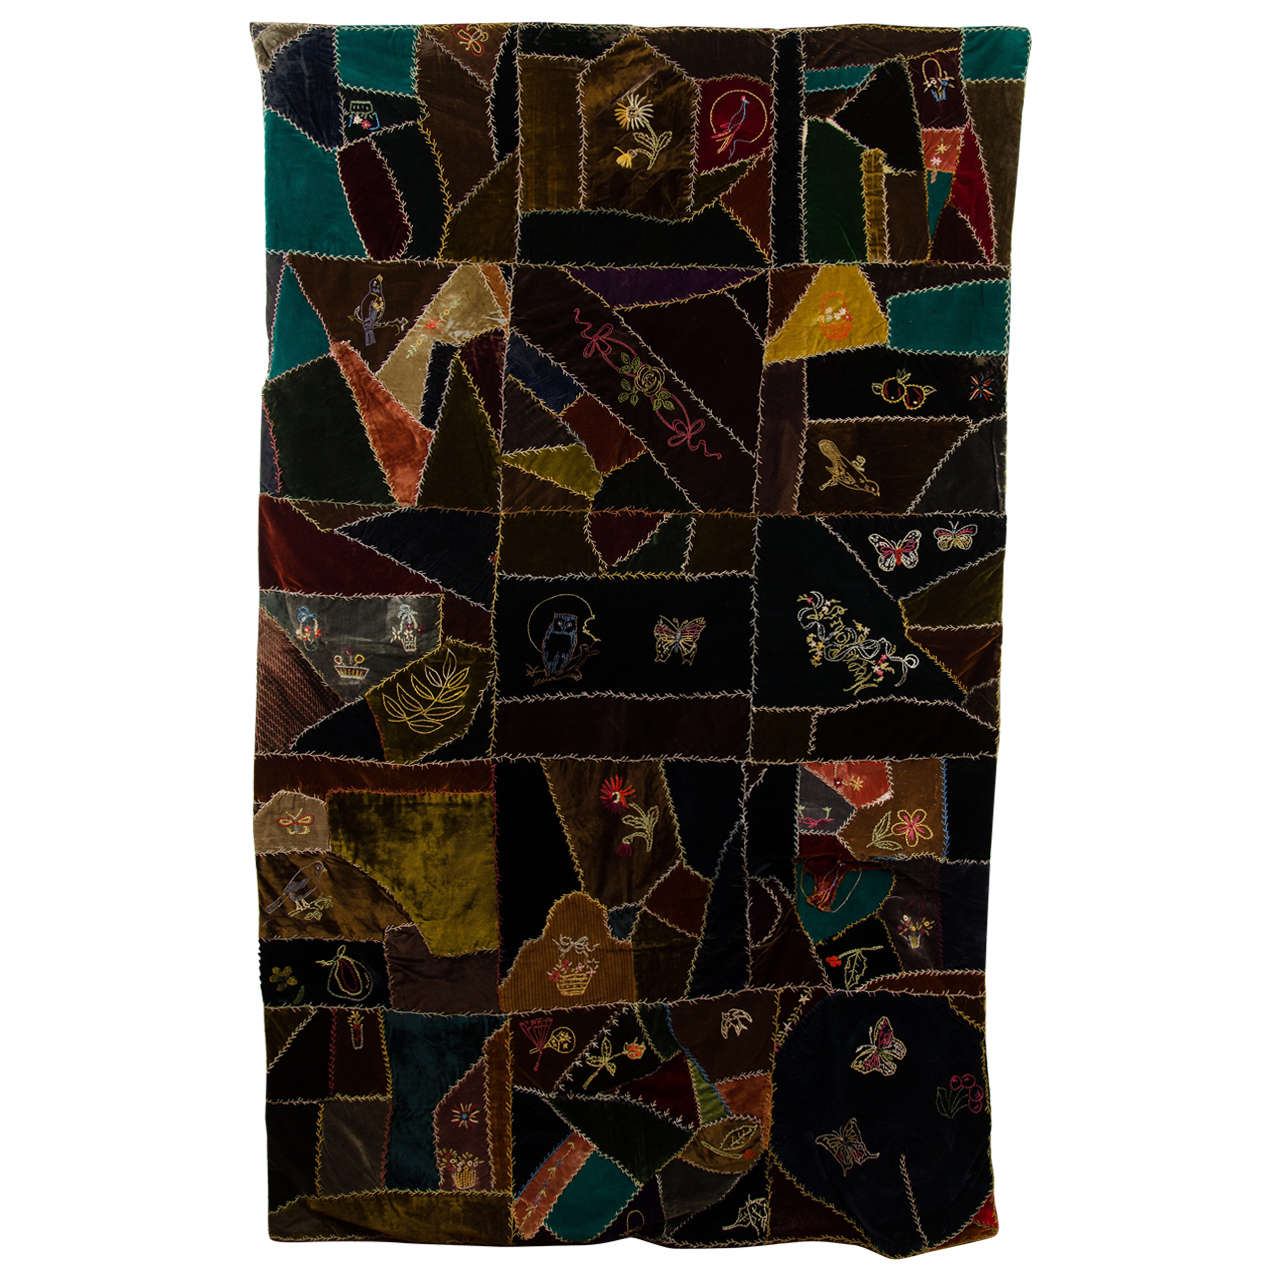 An Antique Handmade Crazy Quilt in Embroidered Velvet